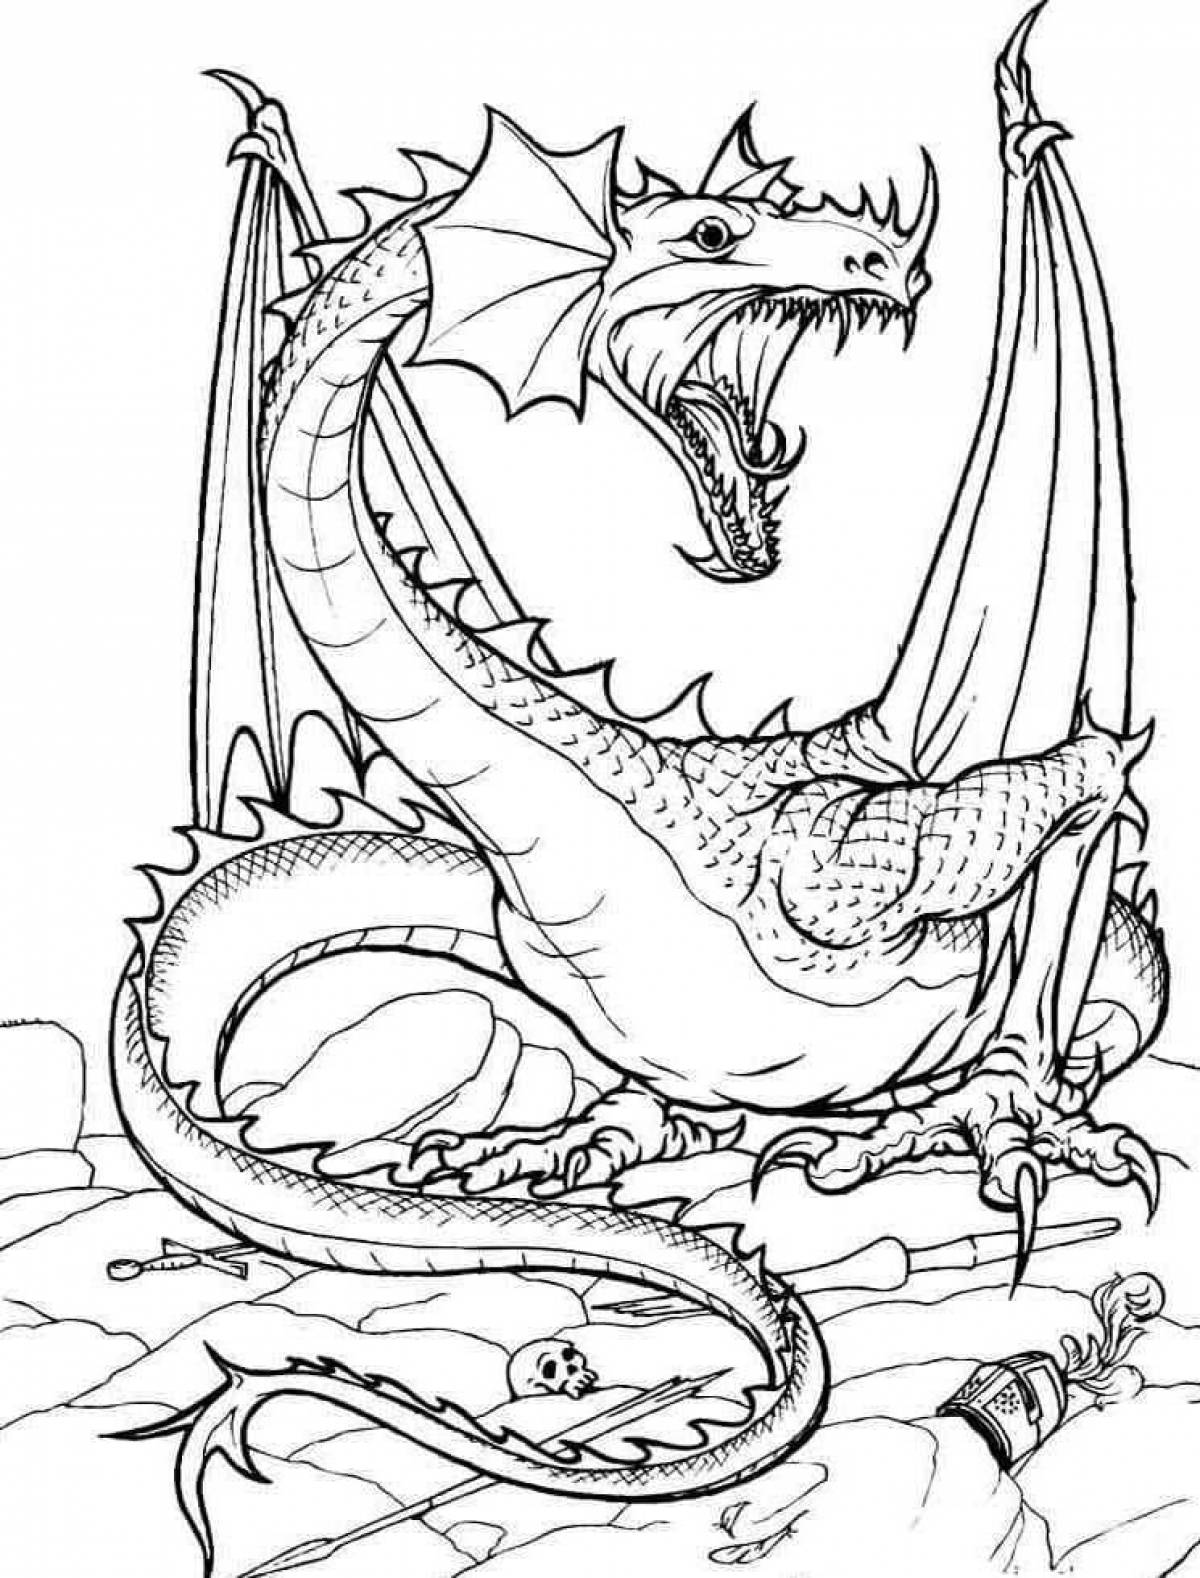 Fantastic dragon coloring book